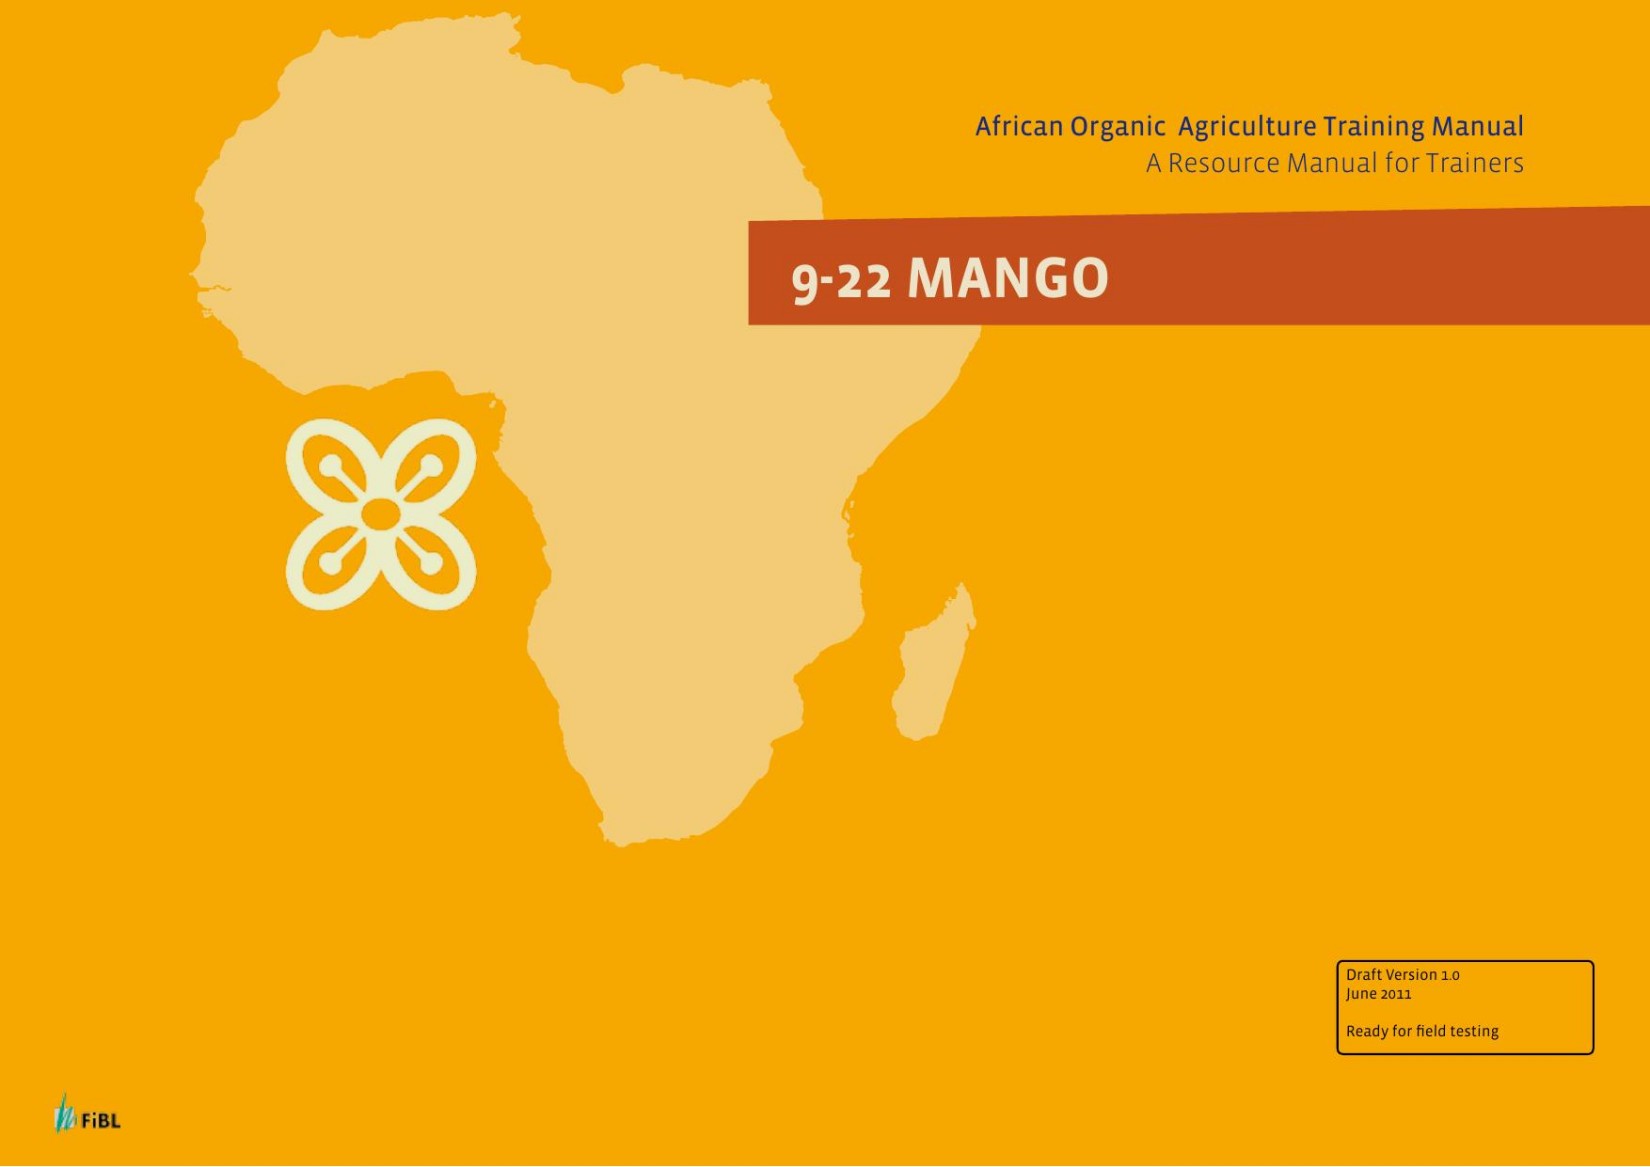 African Organic Agriculture Training Manual - Mango